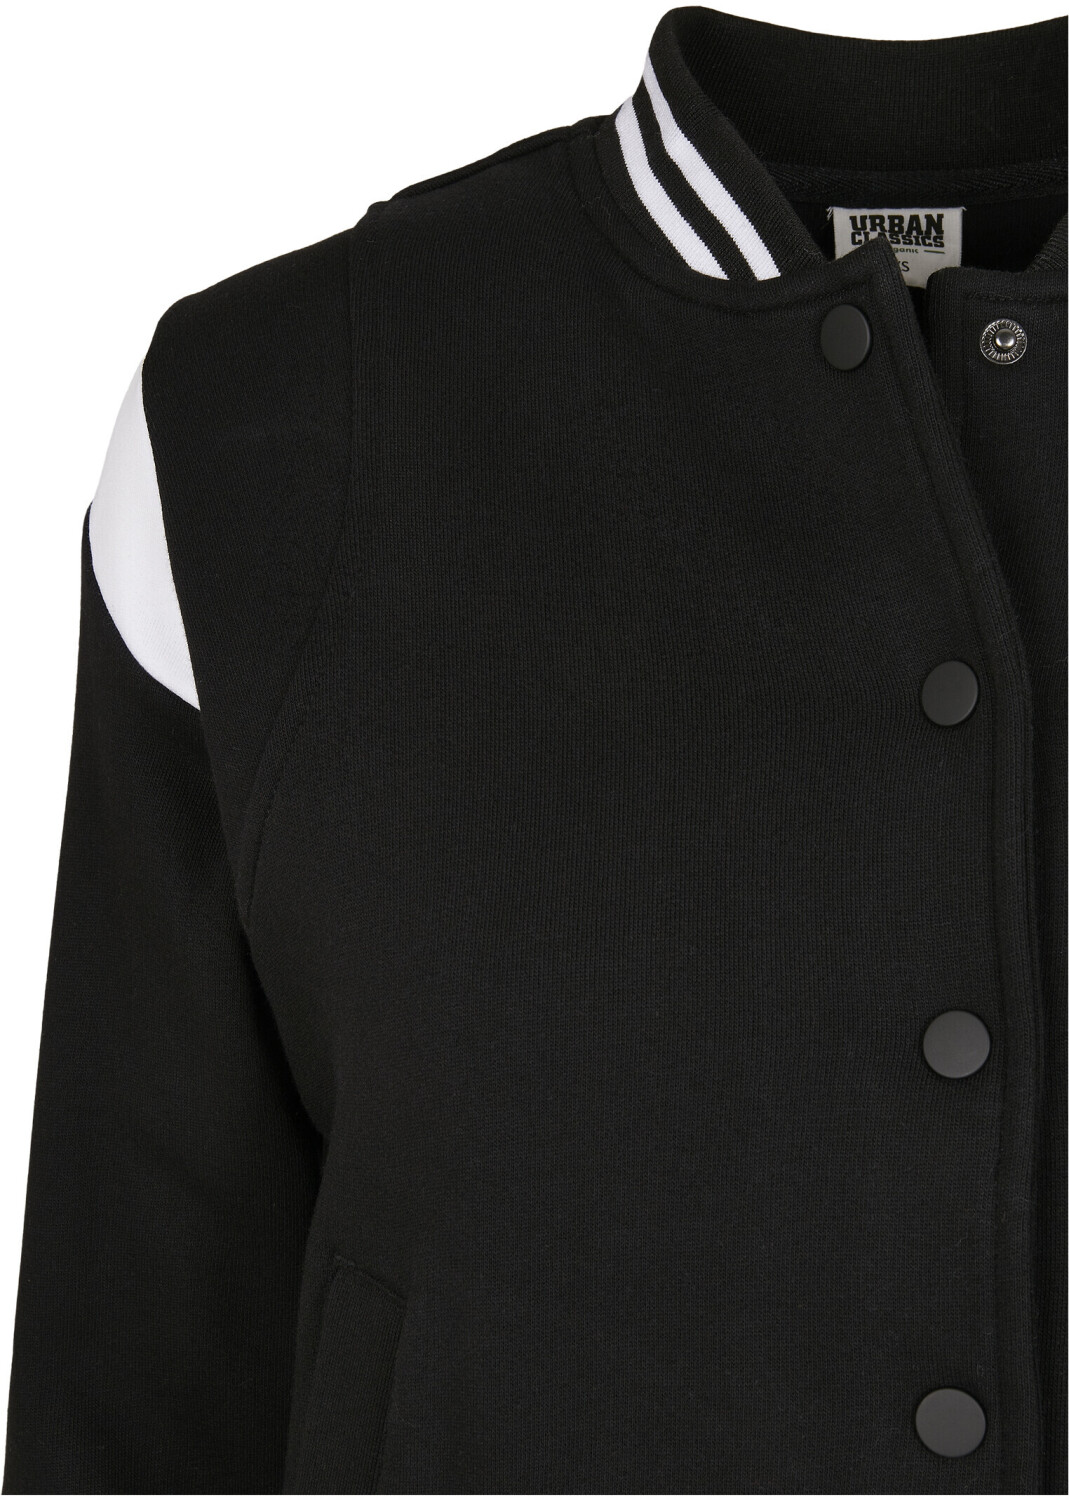 Urban Classics | ab bei (TB3776-00826-0037) Jacket Sweat Organic College 36,79 black/white Inset € Ladies Preisvergleich